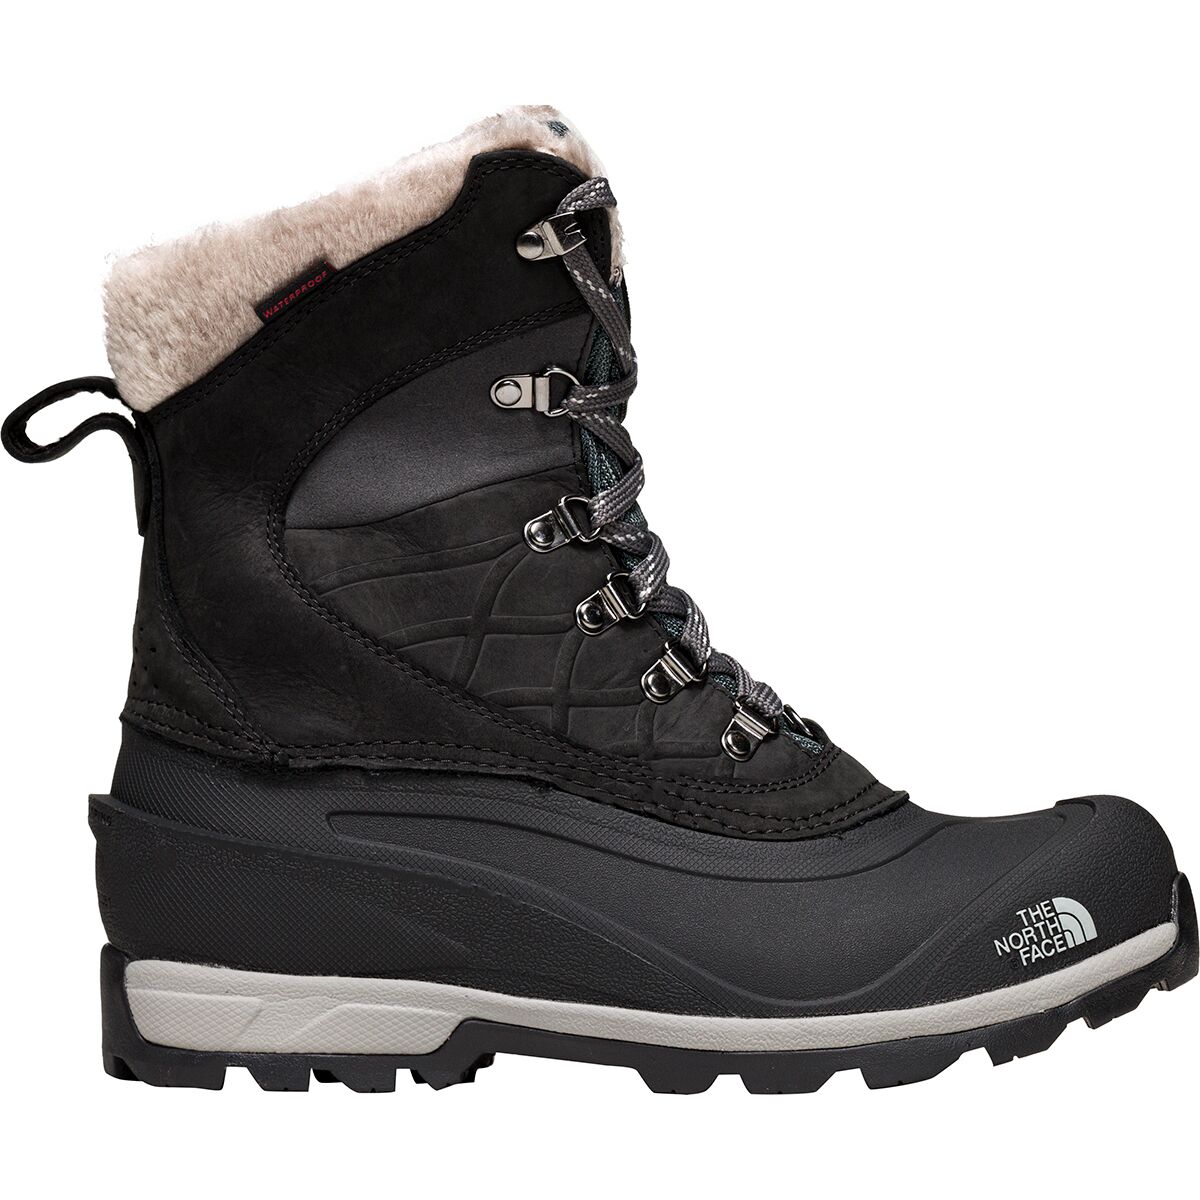 chilkat boots womens